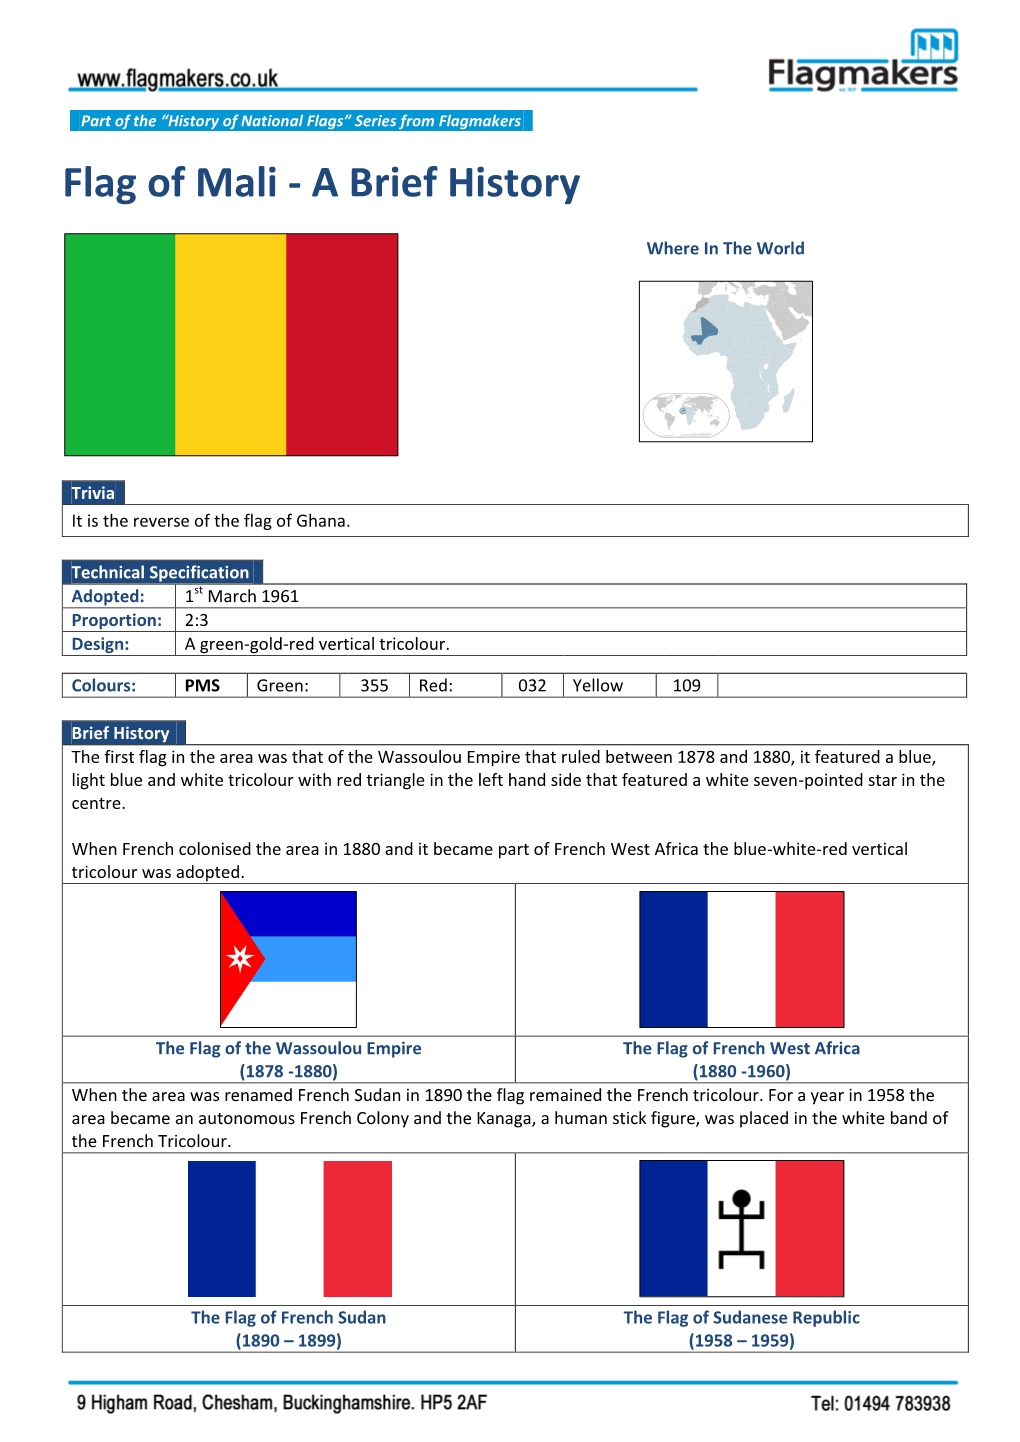 Flag of Mali - a Brief History